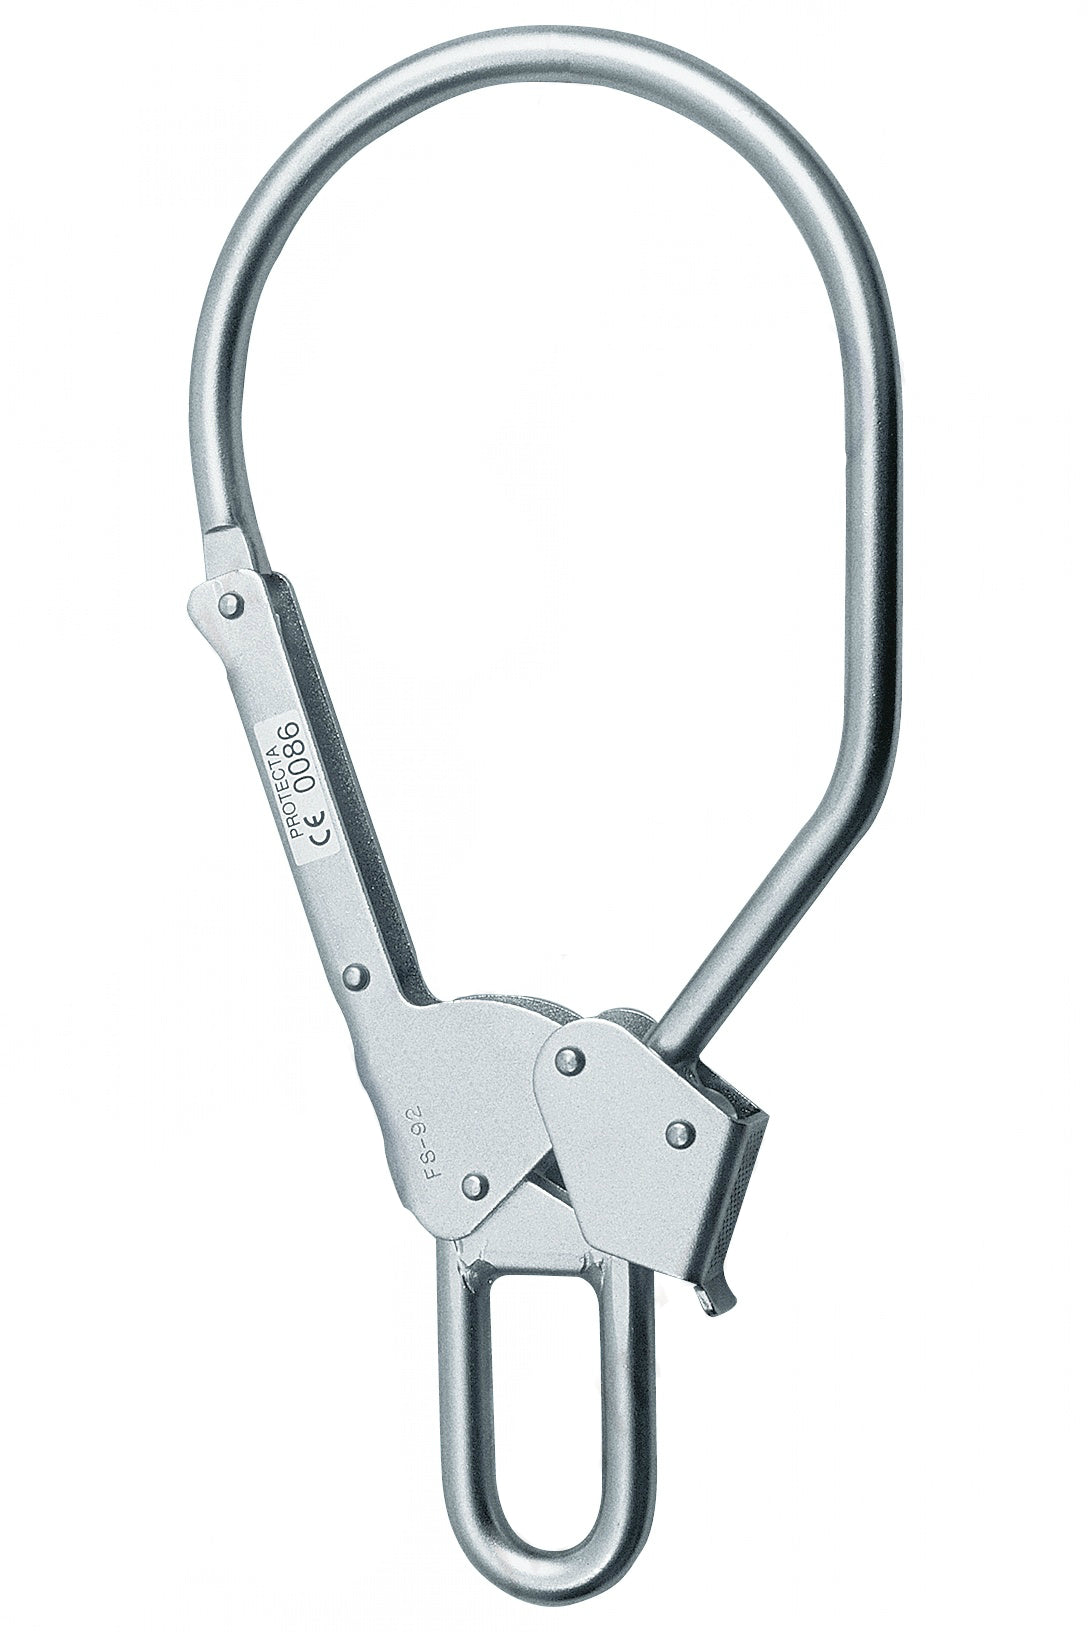 Capital Safety Protecta AJ592 Galvanised Steel Self Locking Karabiner